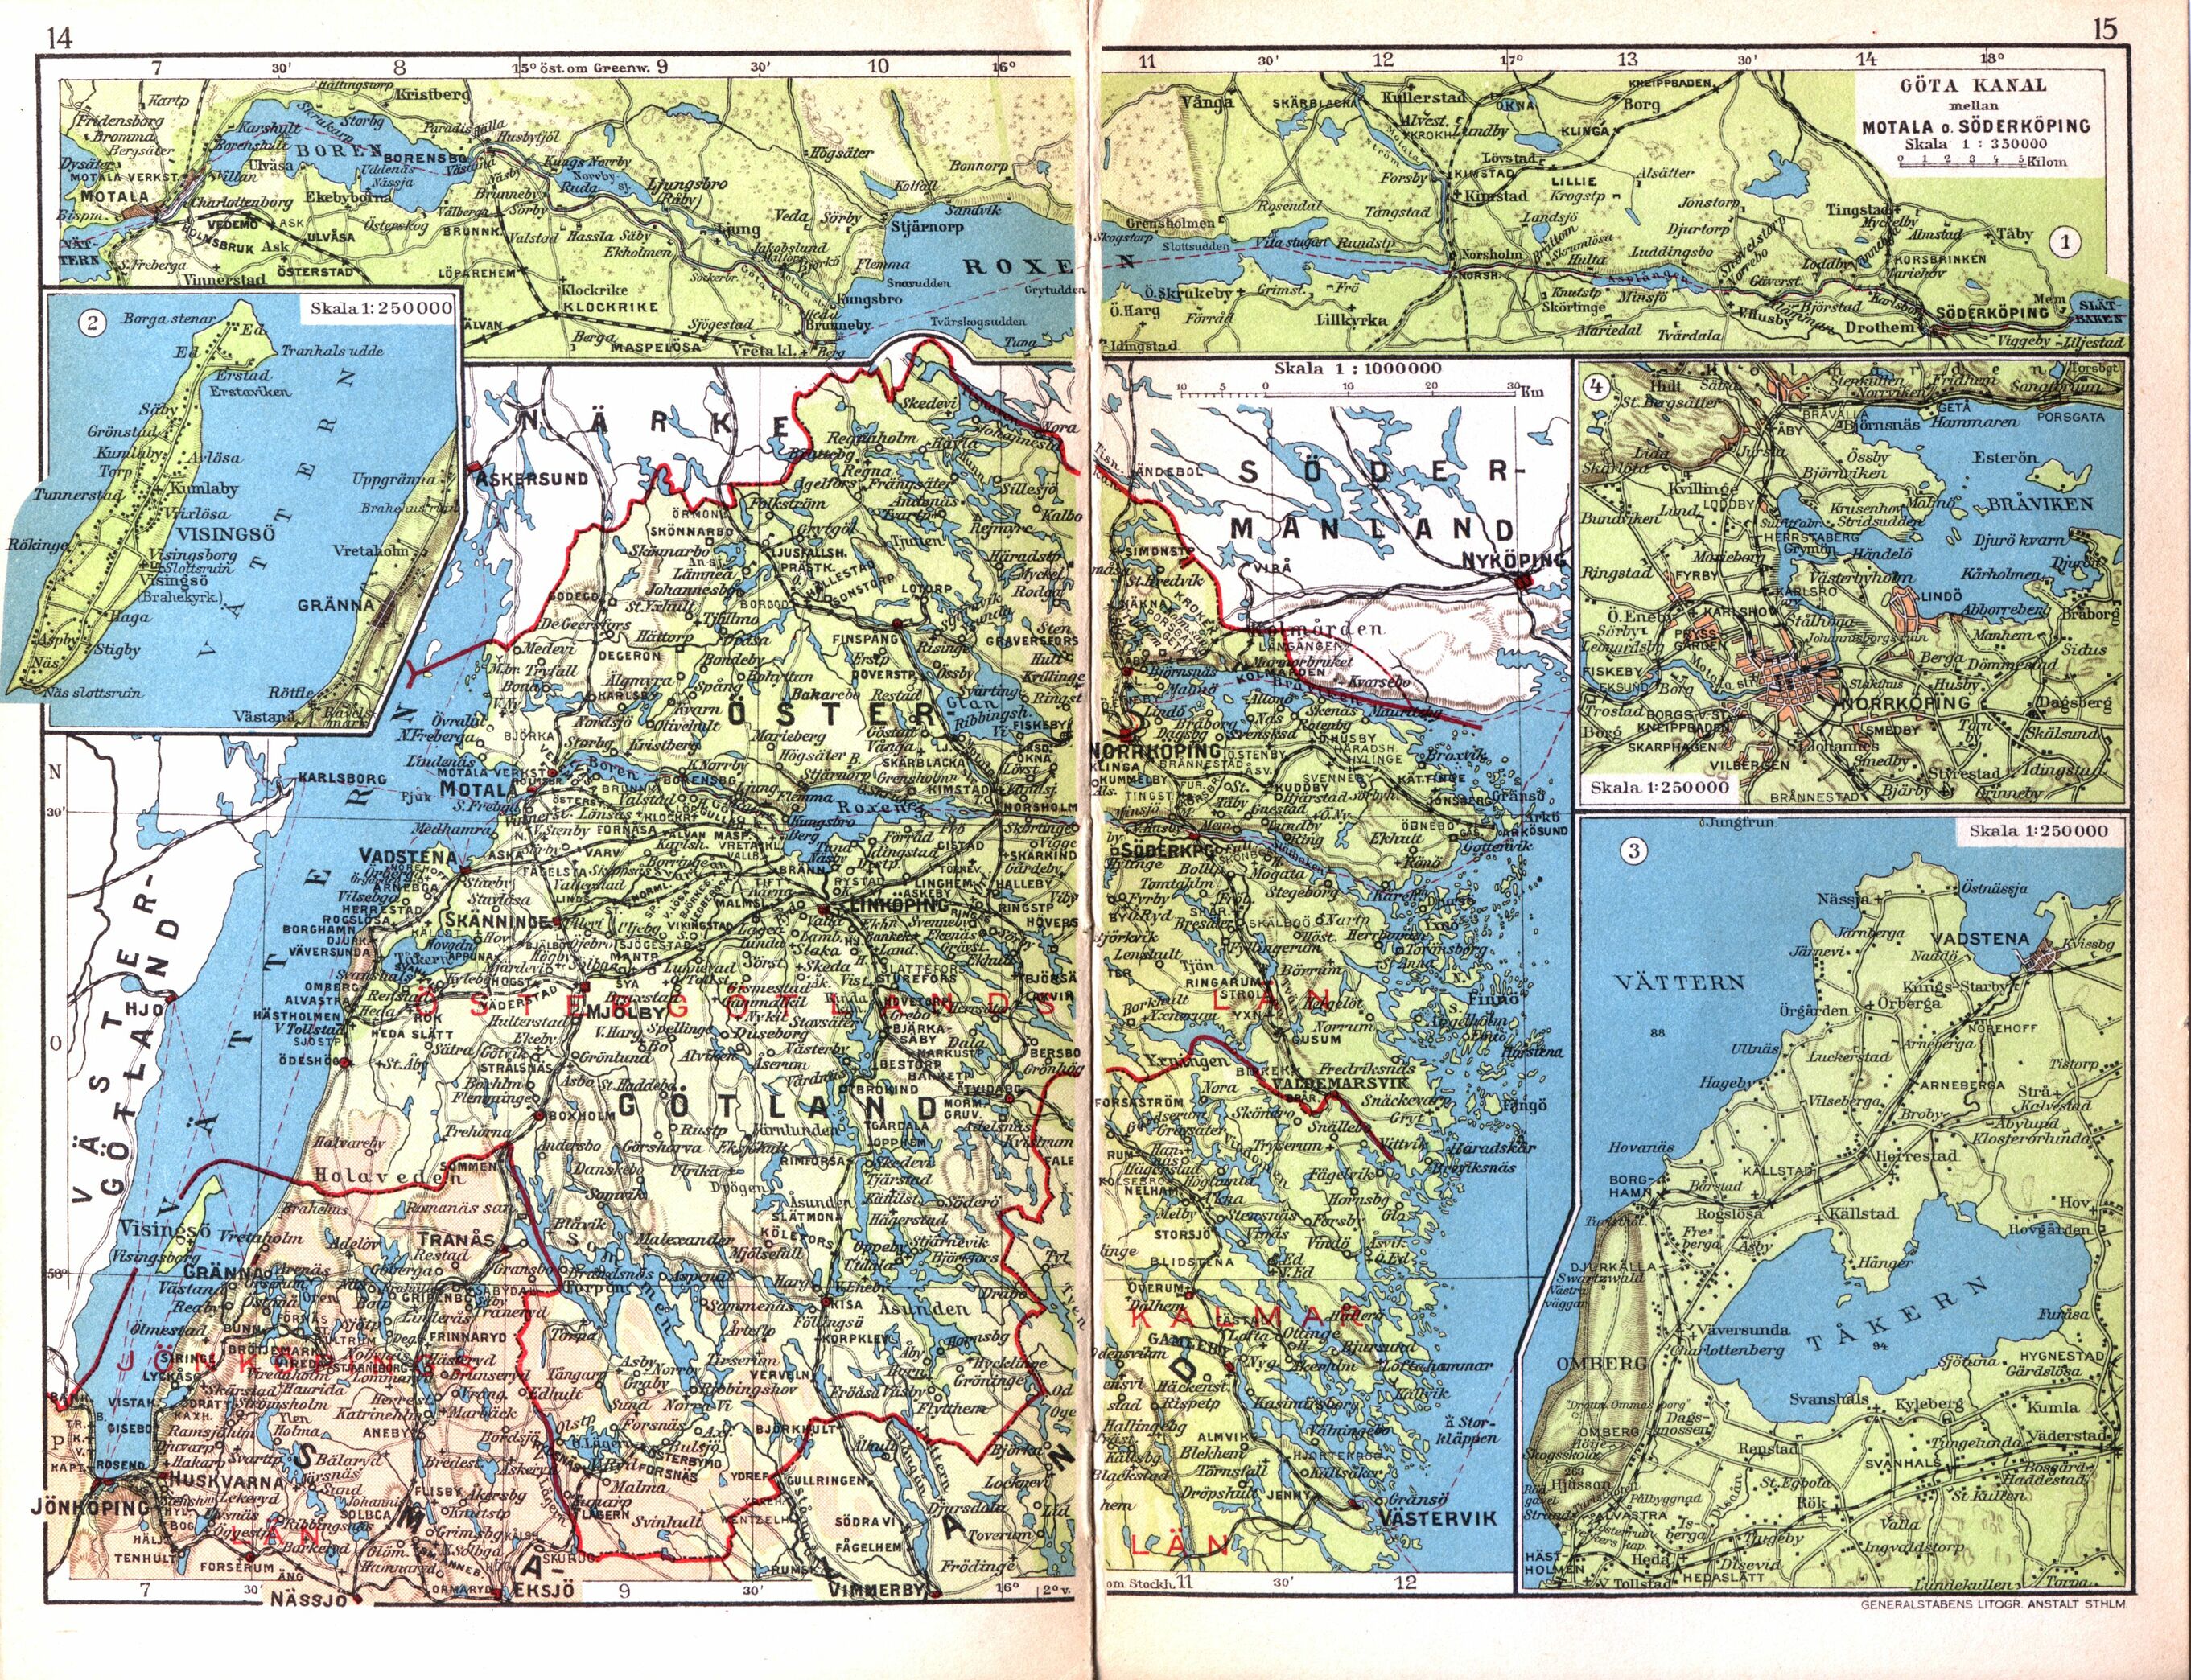 14-15 (Cohrs' atlas över Sverige)